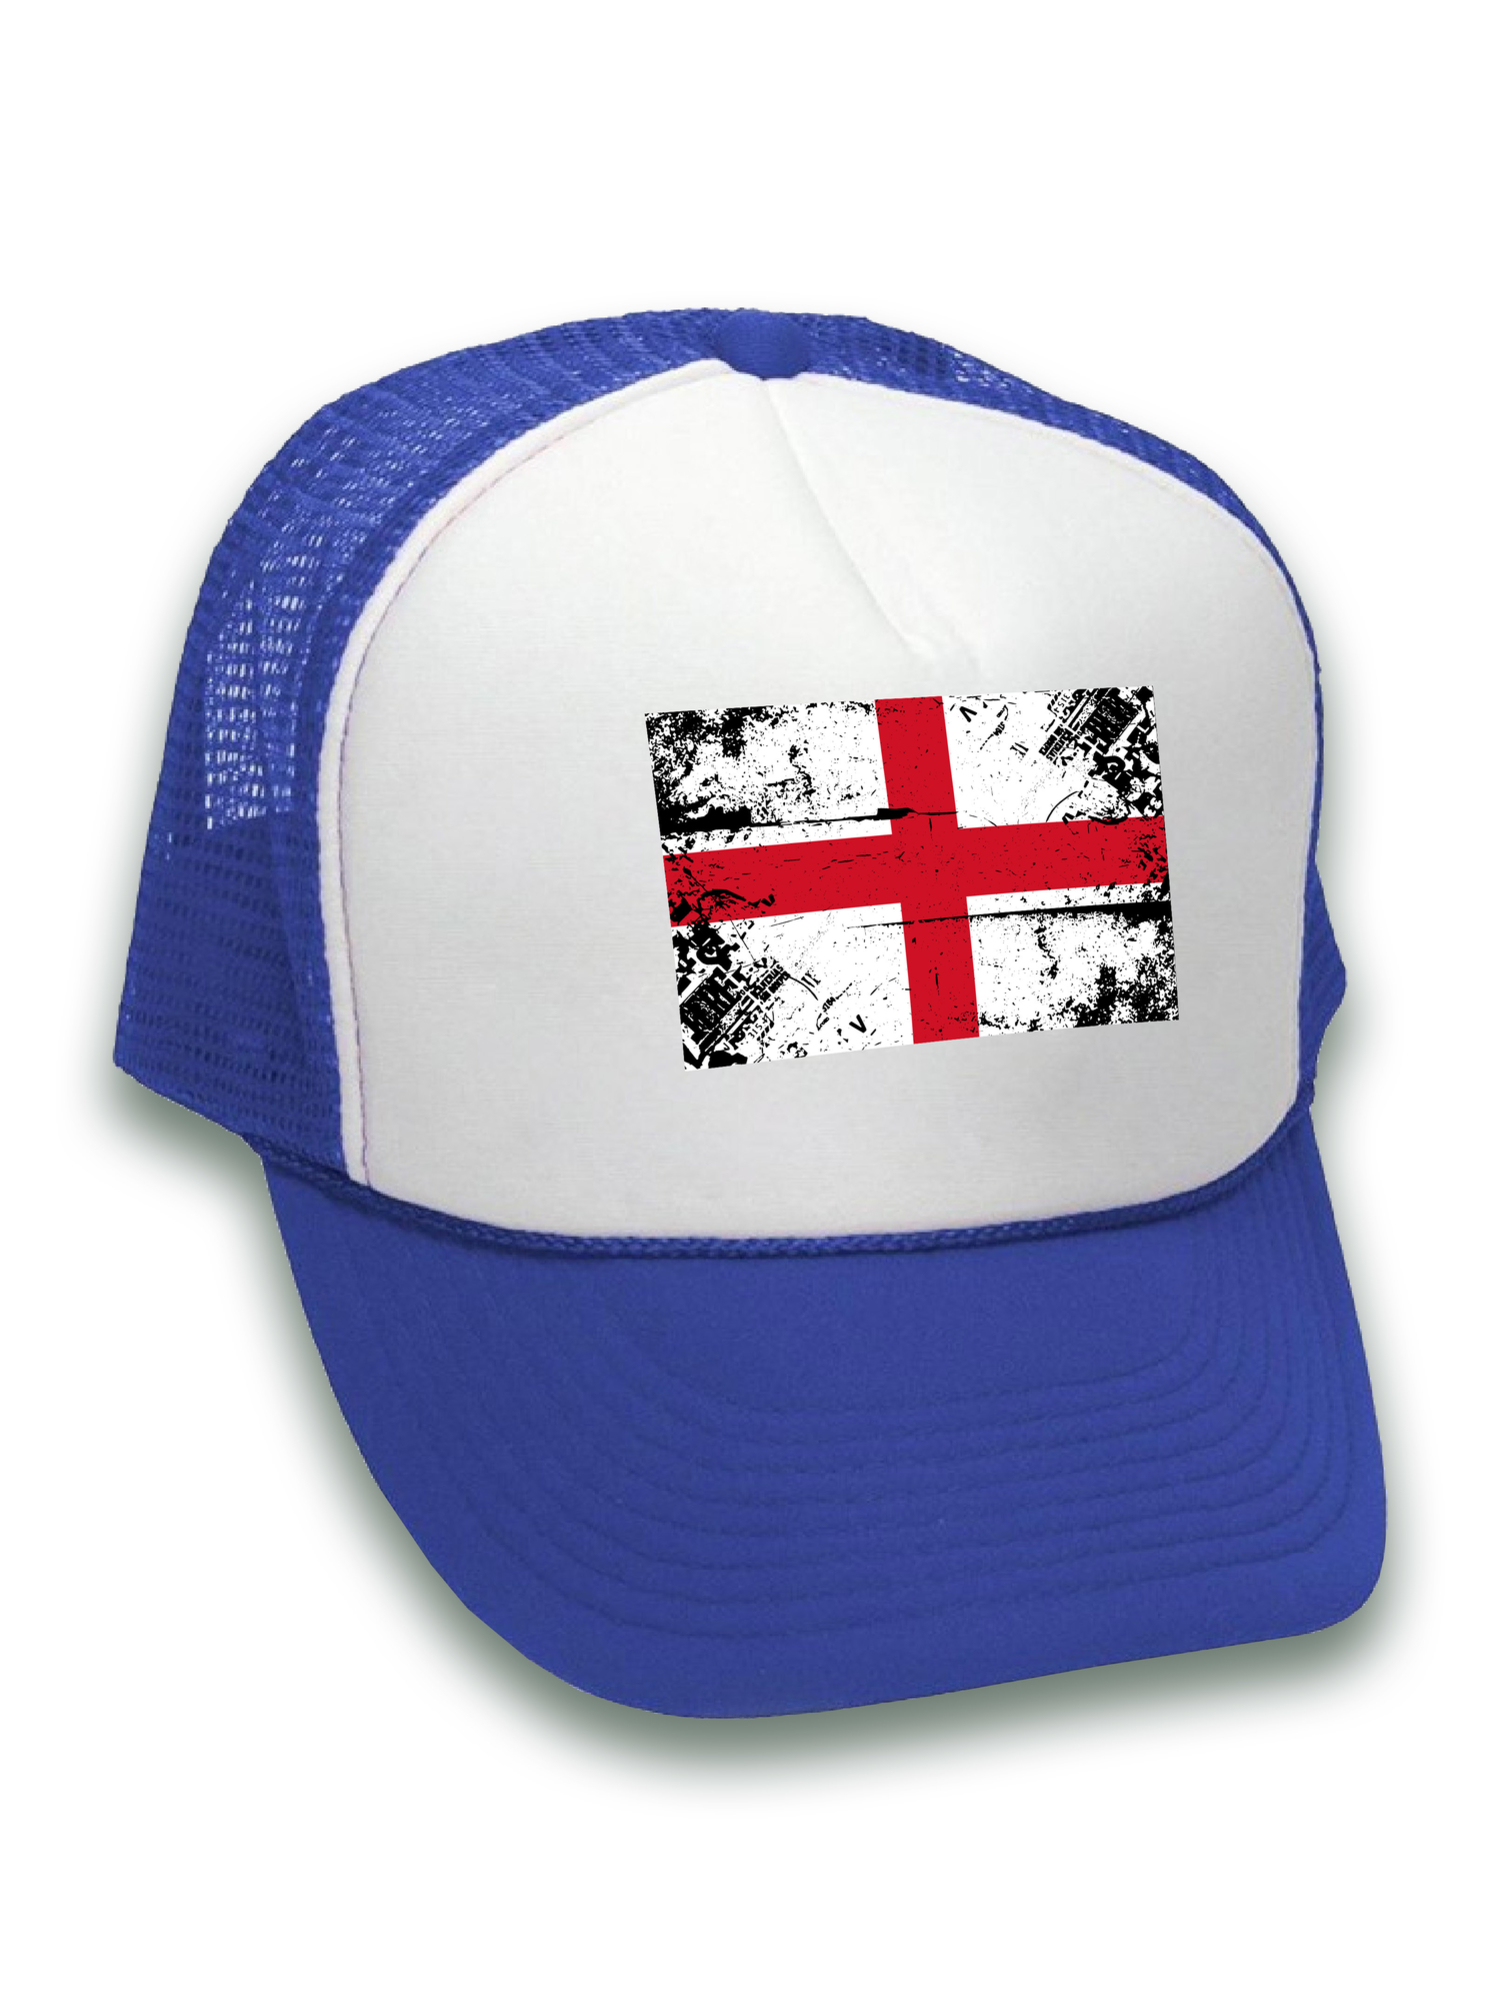 Awkward Styles England Flag Hat English Trucker Hat England Baseball Cap Amazing Gifts from England English Soccer 2018 Hat England 2018 Hat for Men and Women English Flag Snapback Hats England Gifts - image 2 of 6